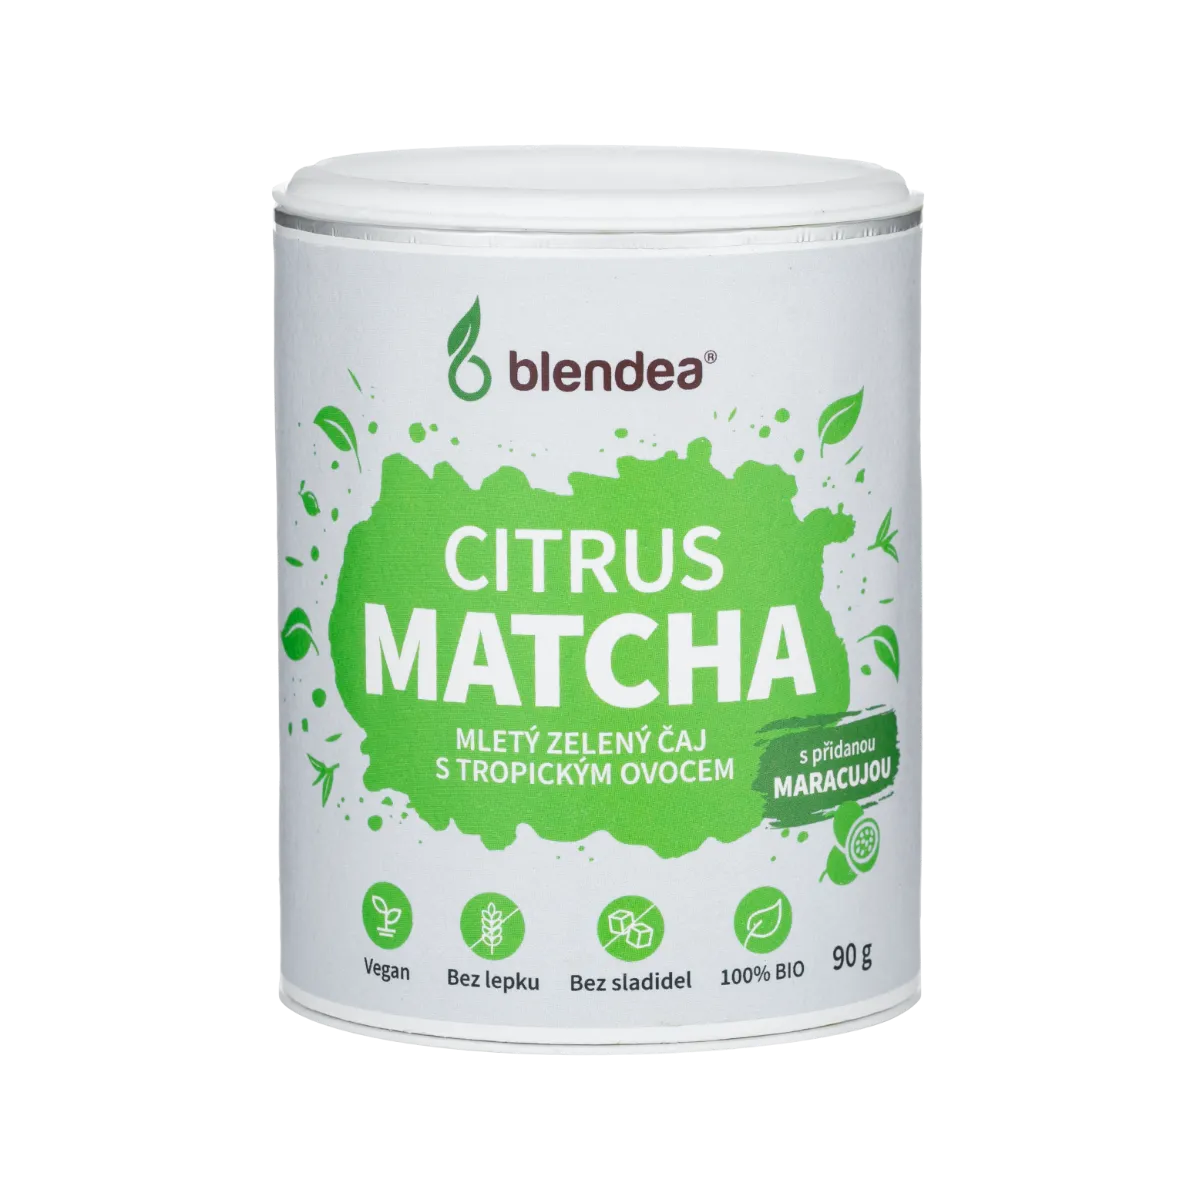 Blendea Citrus Matcha 90 g